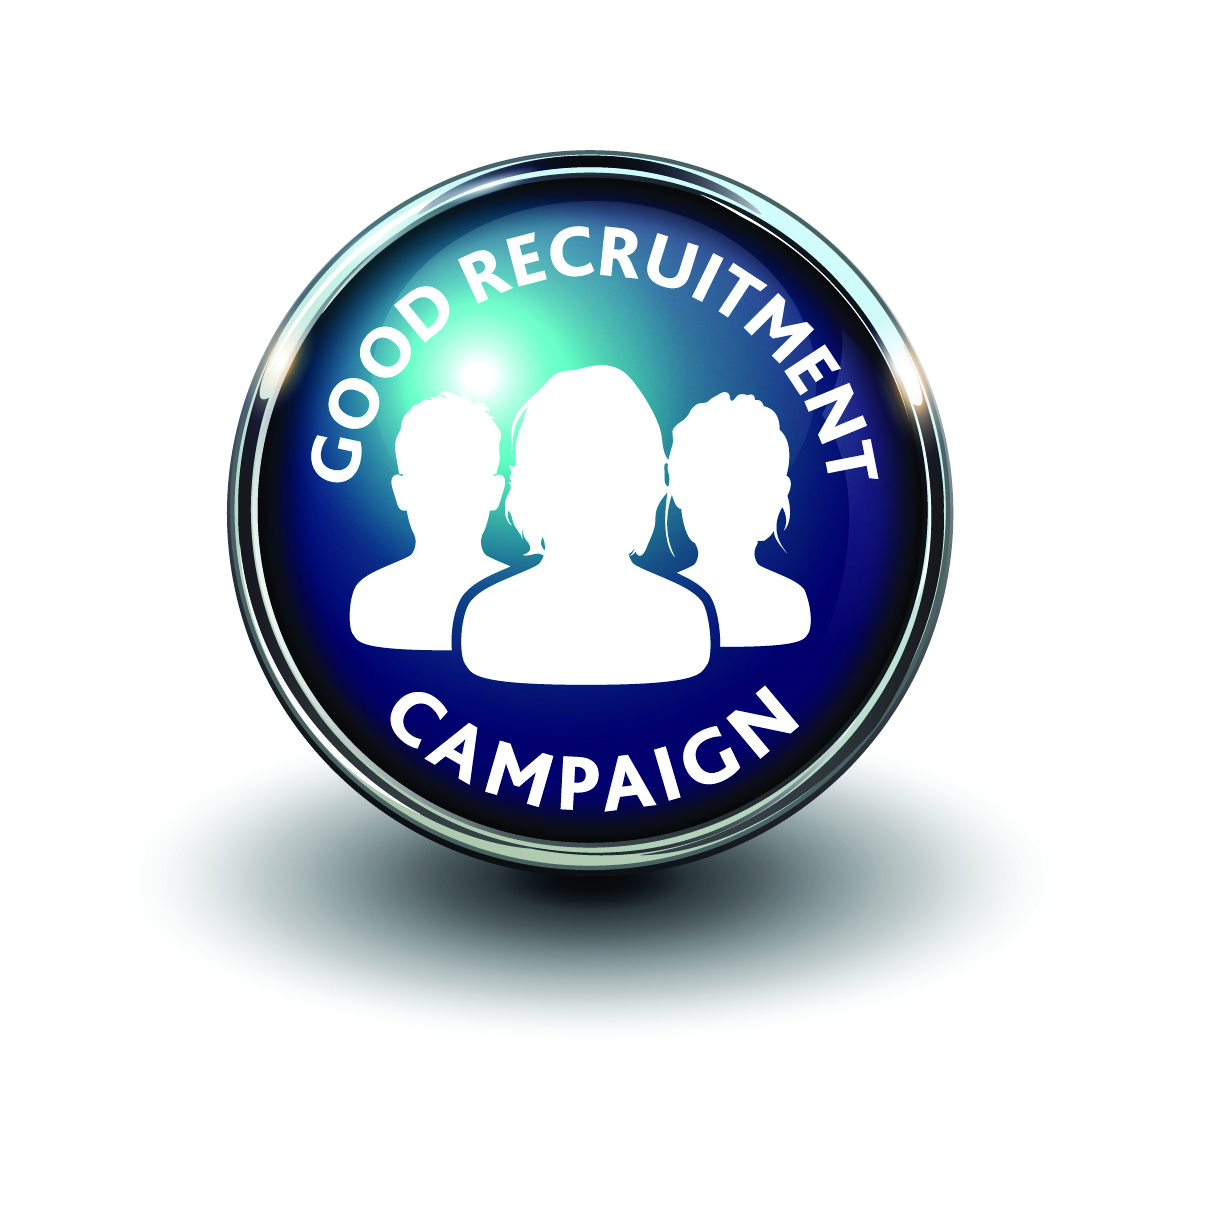 Good recruitment campaign logo